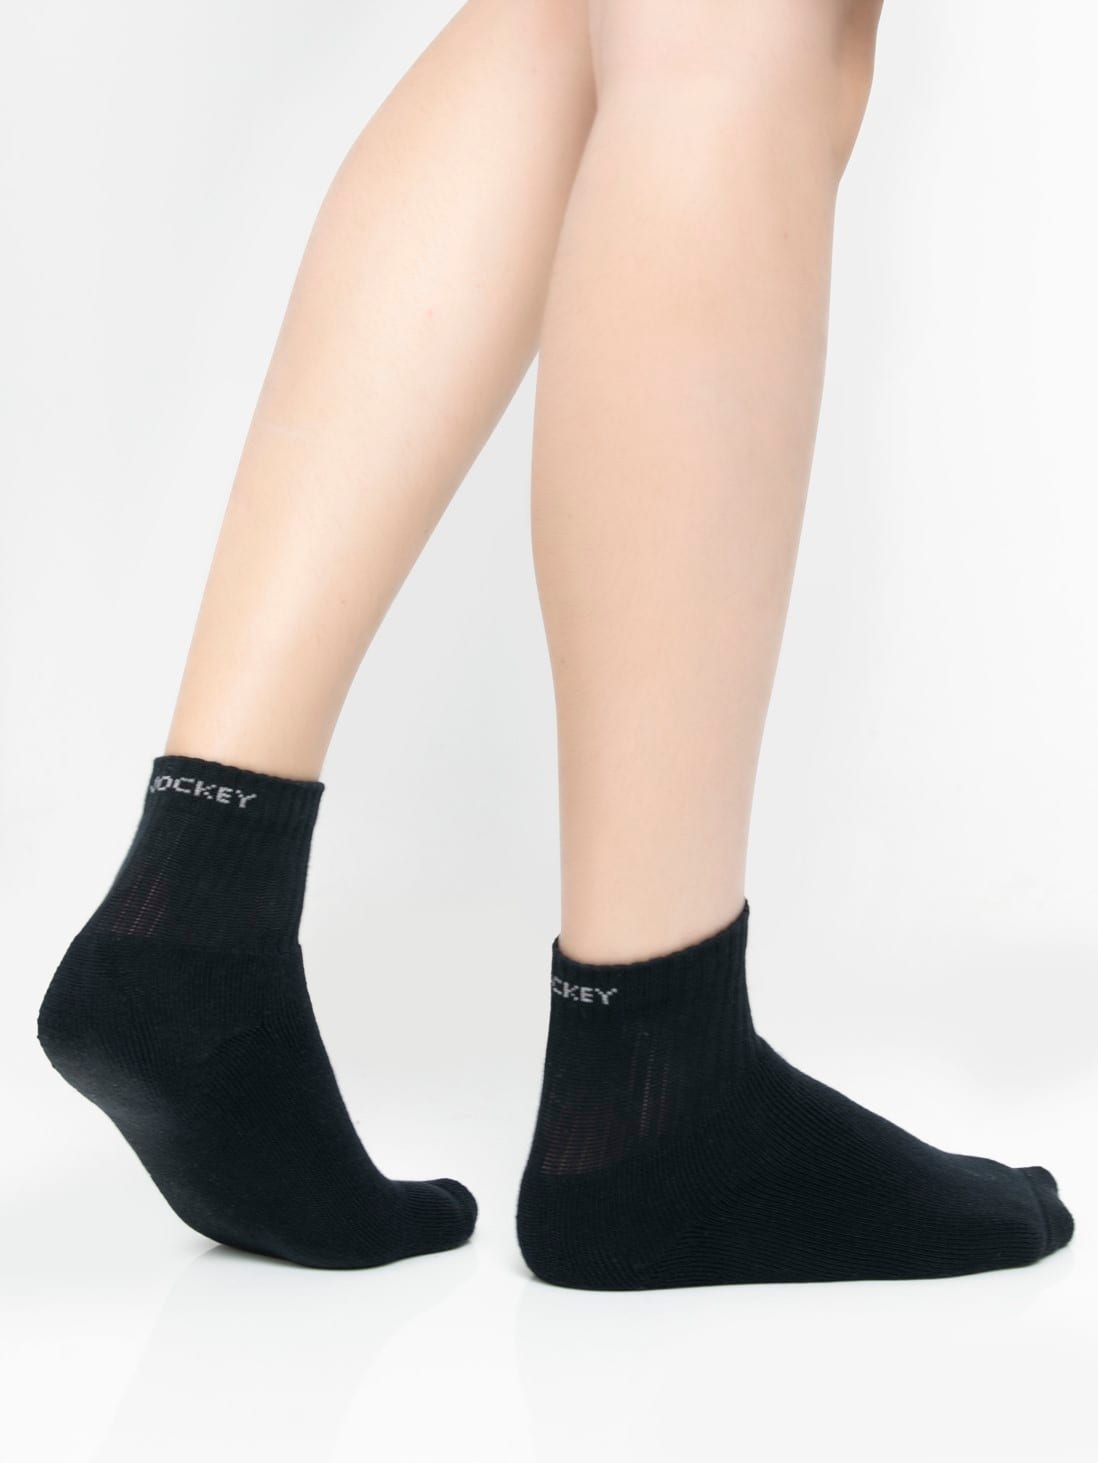 Jockey Men Socks | Men's Compact Cotton Terry Ankle Length Socks With ...